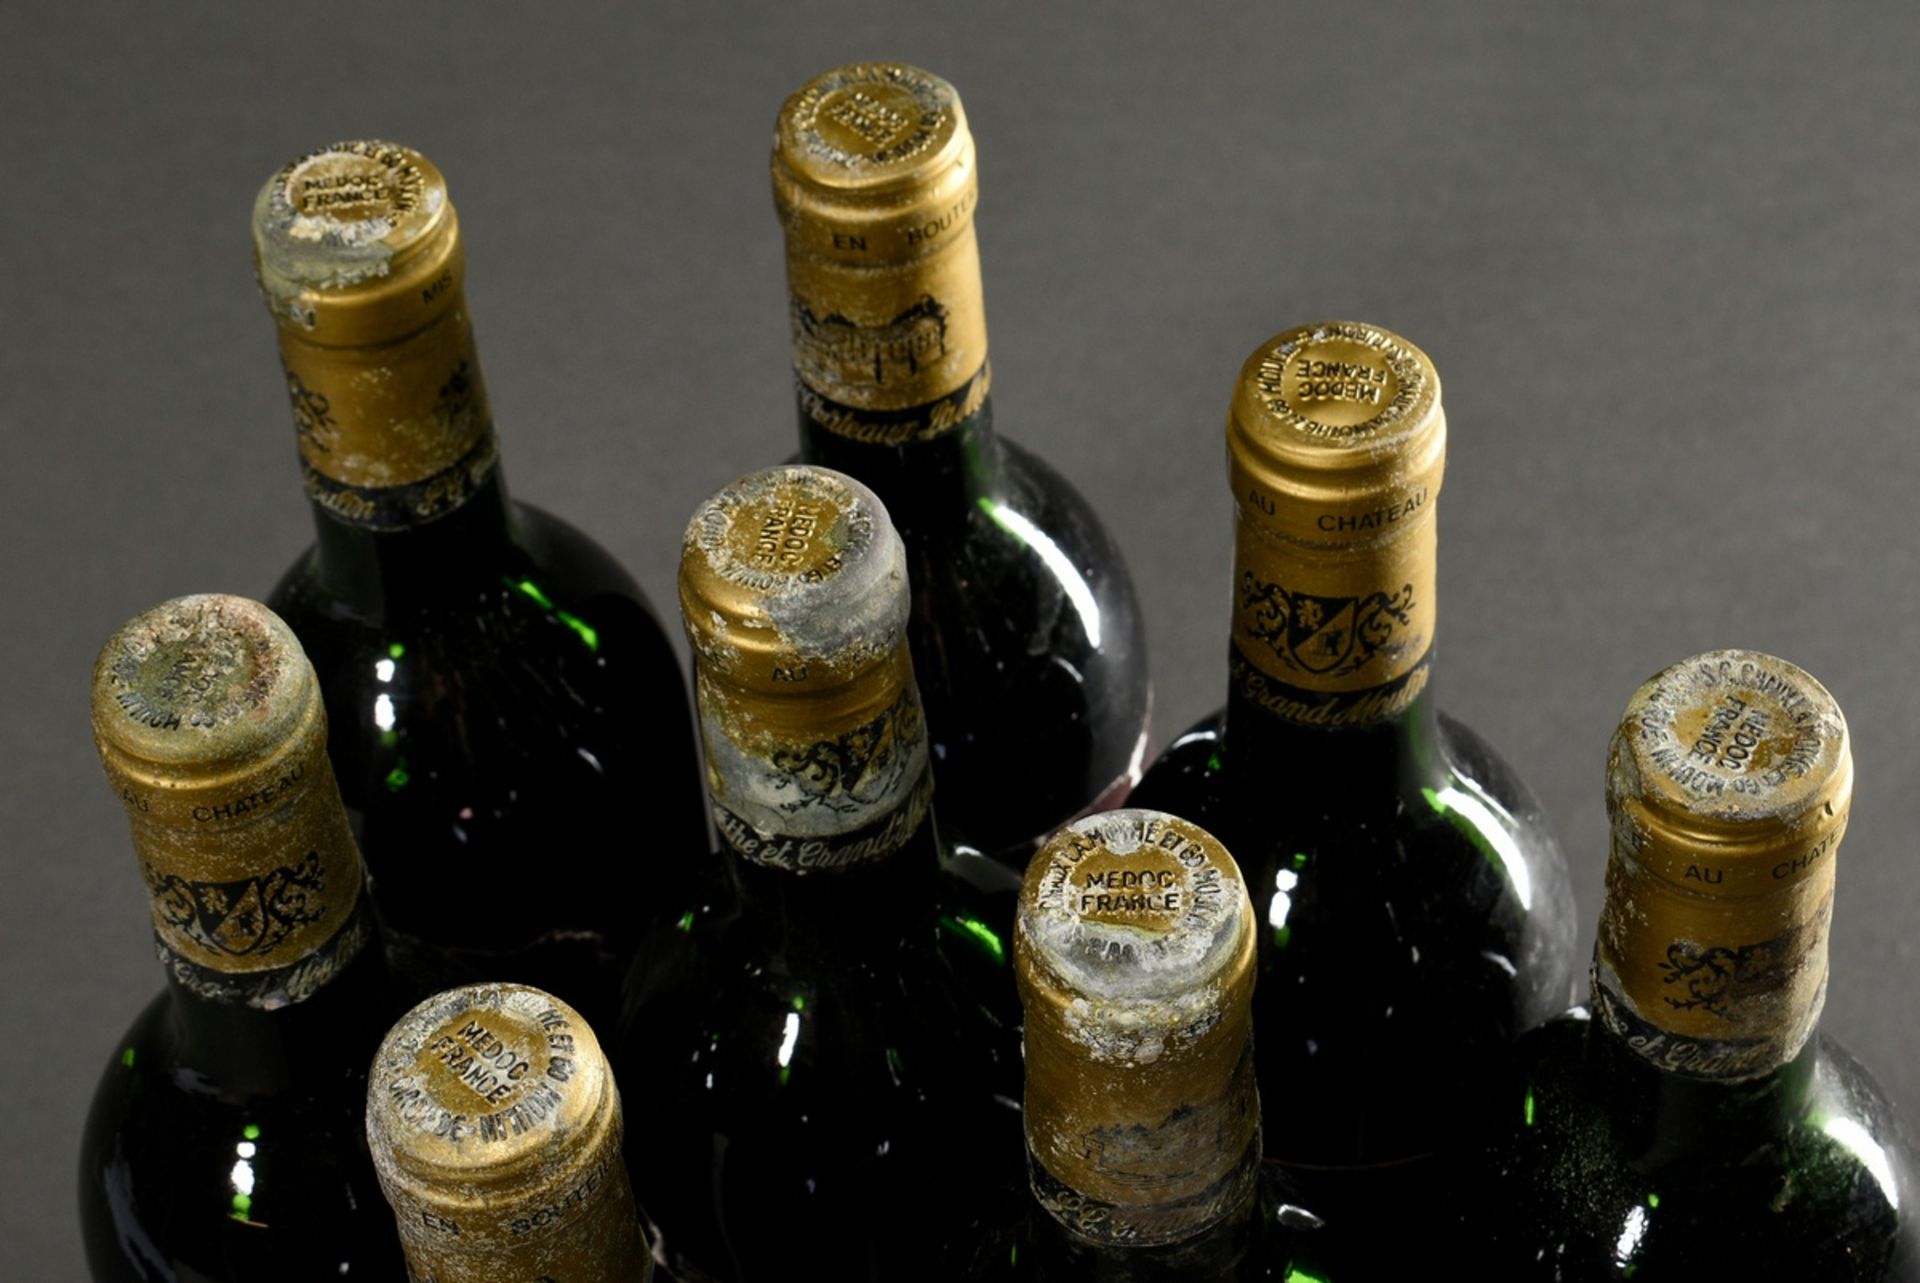 6 Bottles 1985 Chateau La Mothe, mebac, Haut Medoc, France, red wine, 0,75l, good cellar storage th - Image 5 of 5